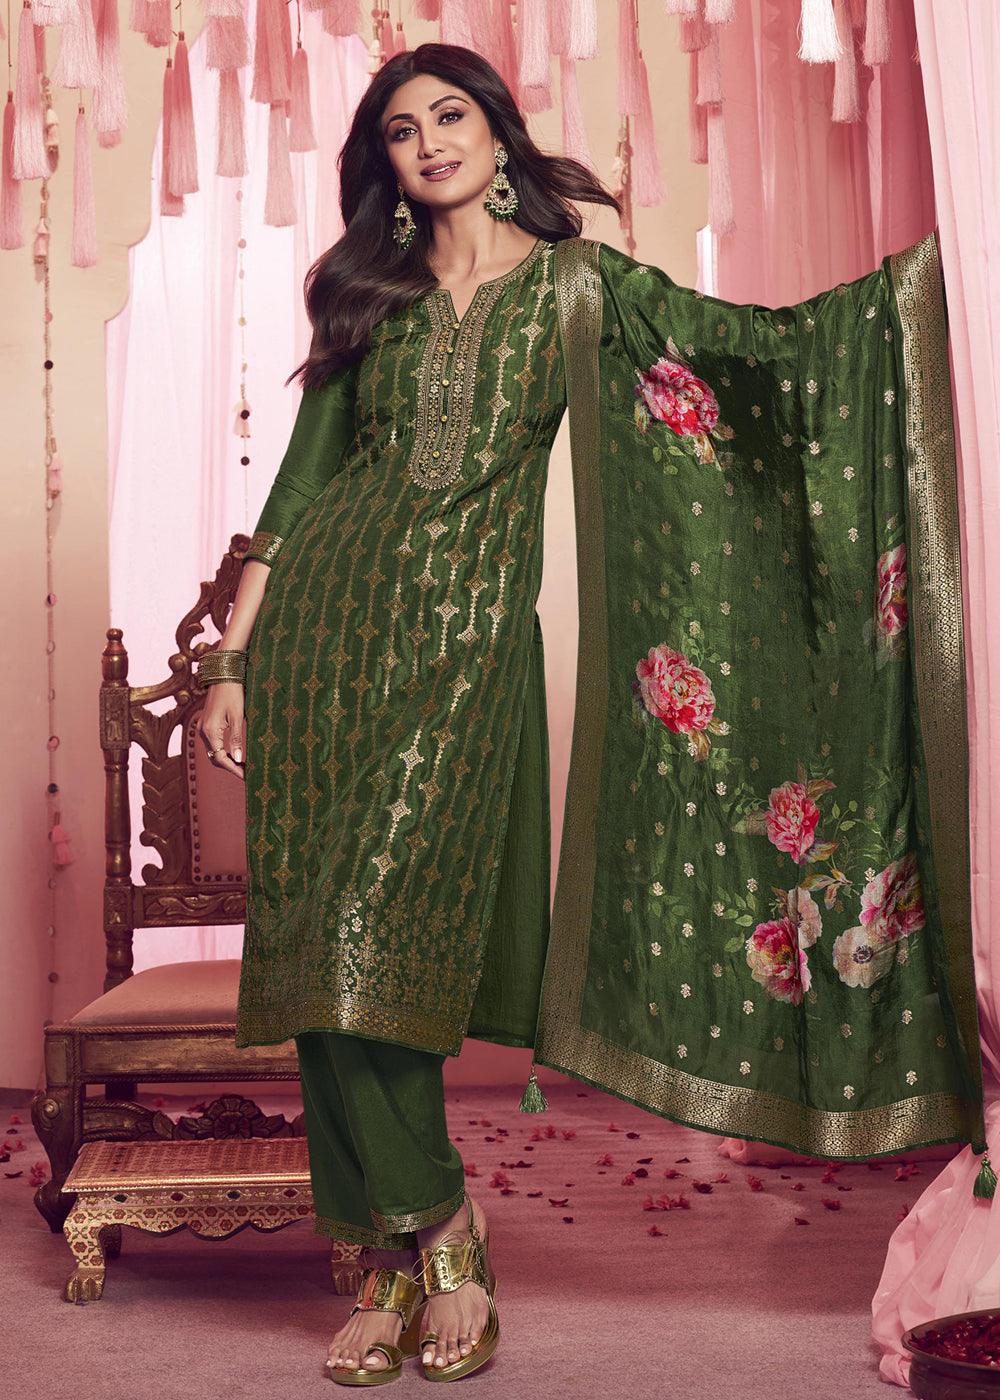 Buy Now Shilpa Shetty Light Green Mehndi Wear Salwar Suit Online in USA, UK, Canada, Germany, Australia & Worldwide at Empress Clothing.